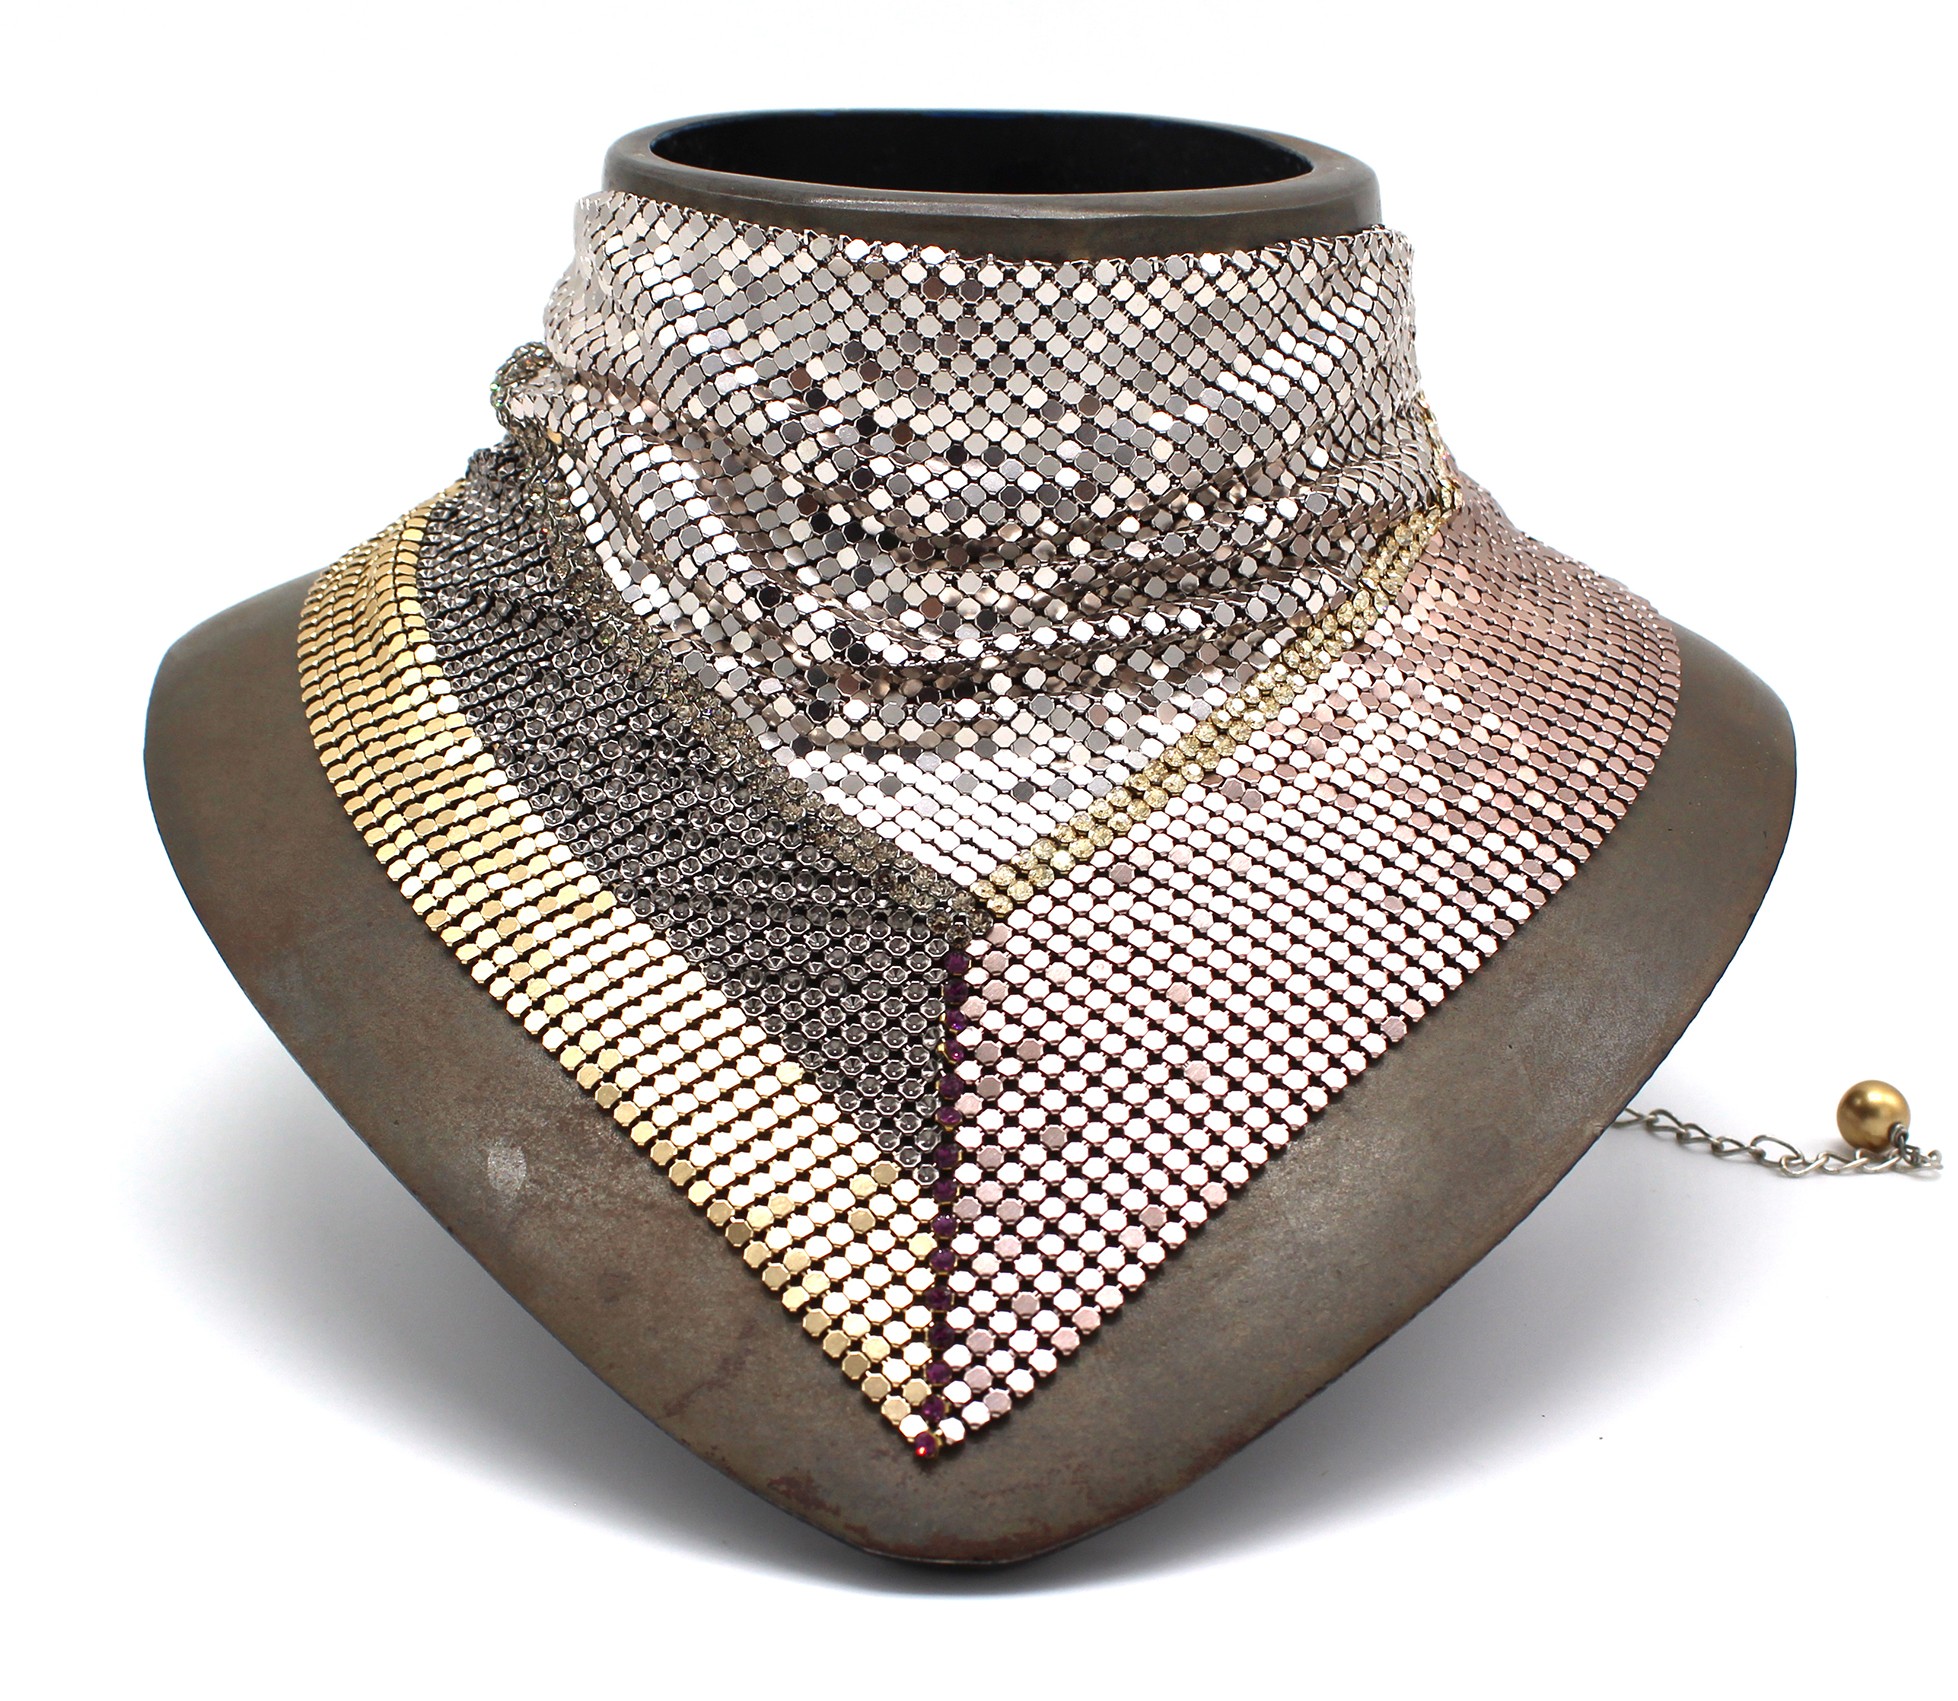 Shiny Fabric Chain Necklace with Large Shamballa Bead Rose Gold Decorative Tube